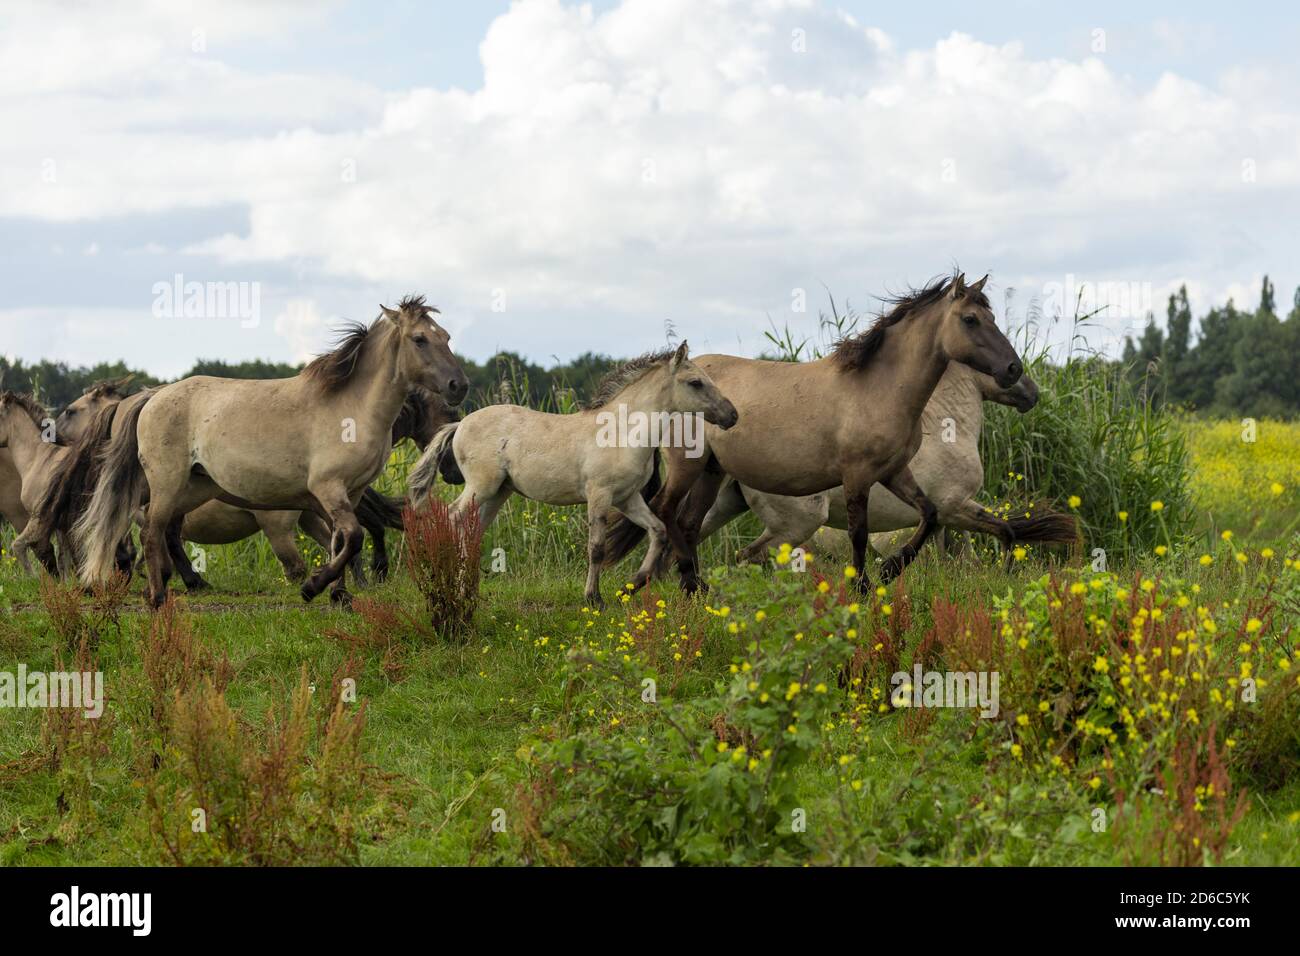 Wild konik caballos oostvaardersplassen reserva natural Flevoland los países Bajos europa Foto de stock